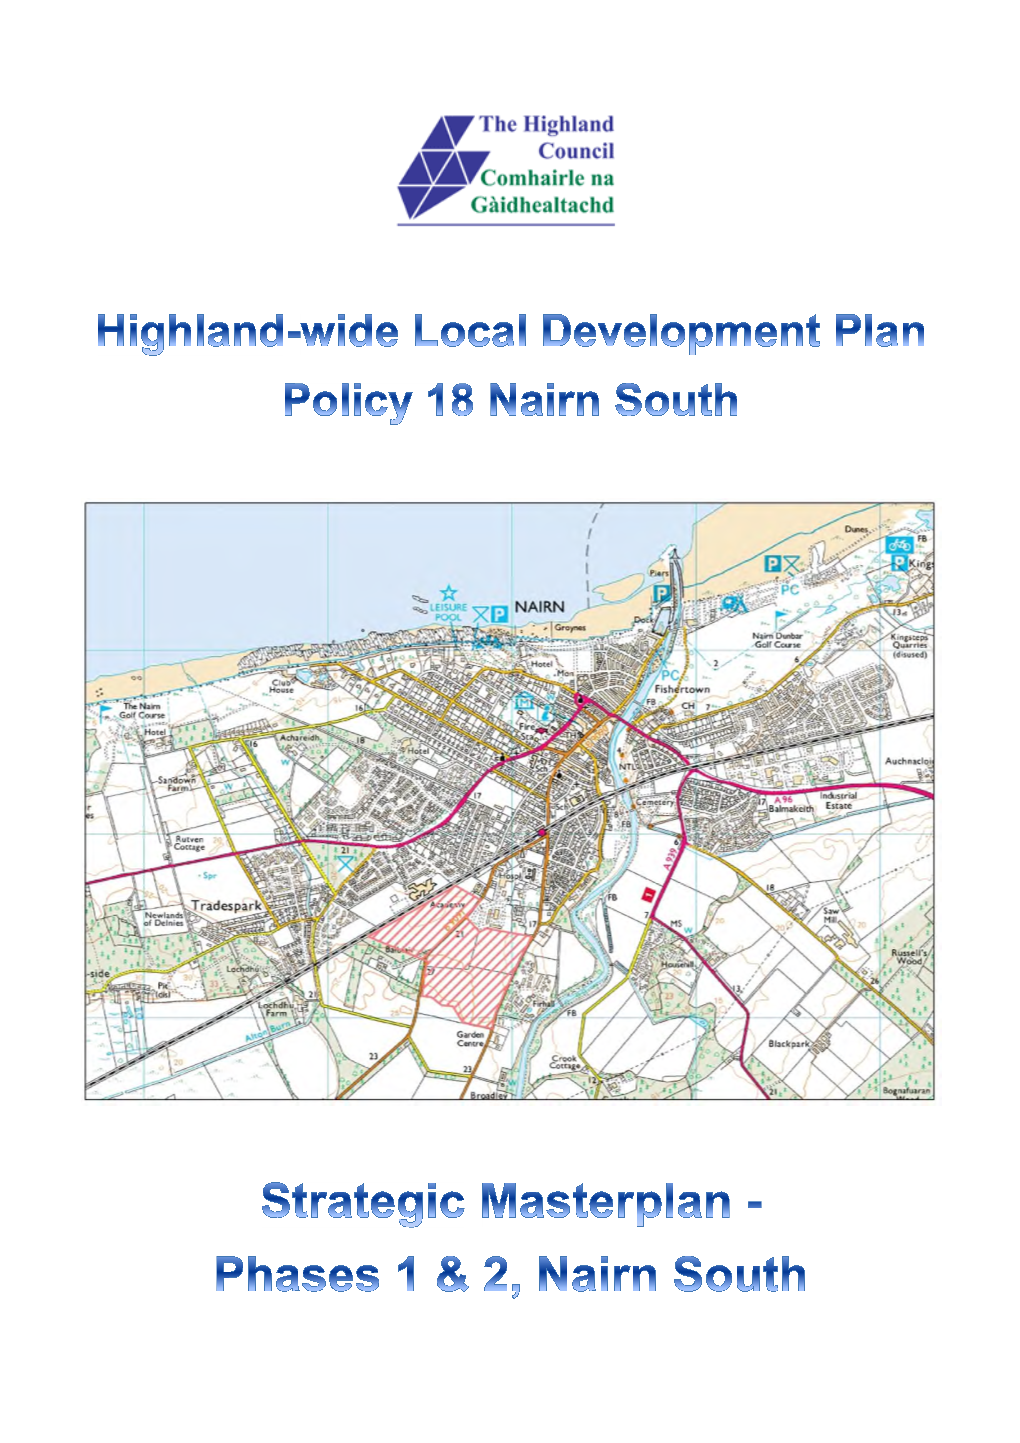 Nairn South Strategic Masterplan, PDF 1.29 MB Download